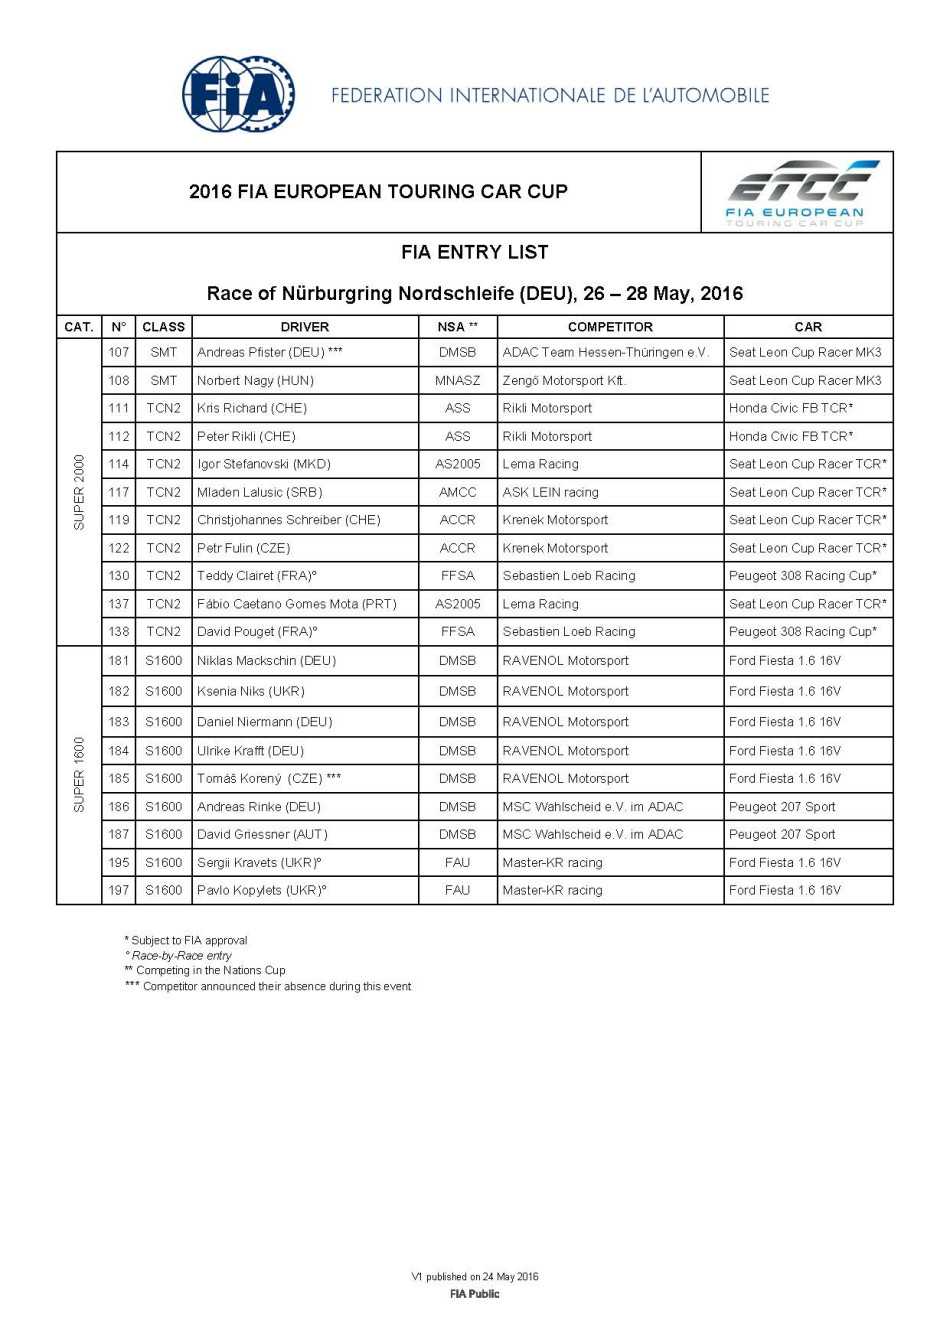 2016 FIA ETCC Race of Nurburgring Nordschleife Entry List